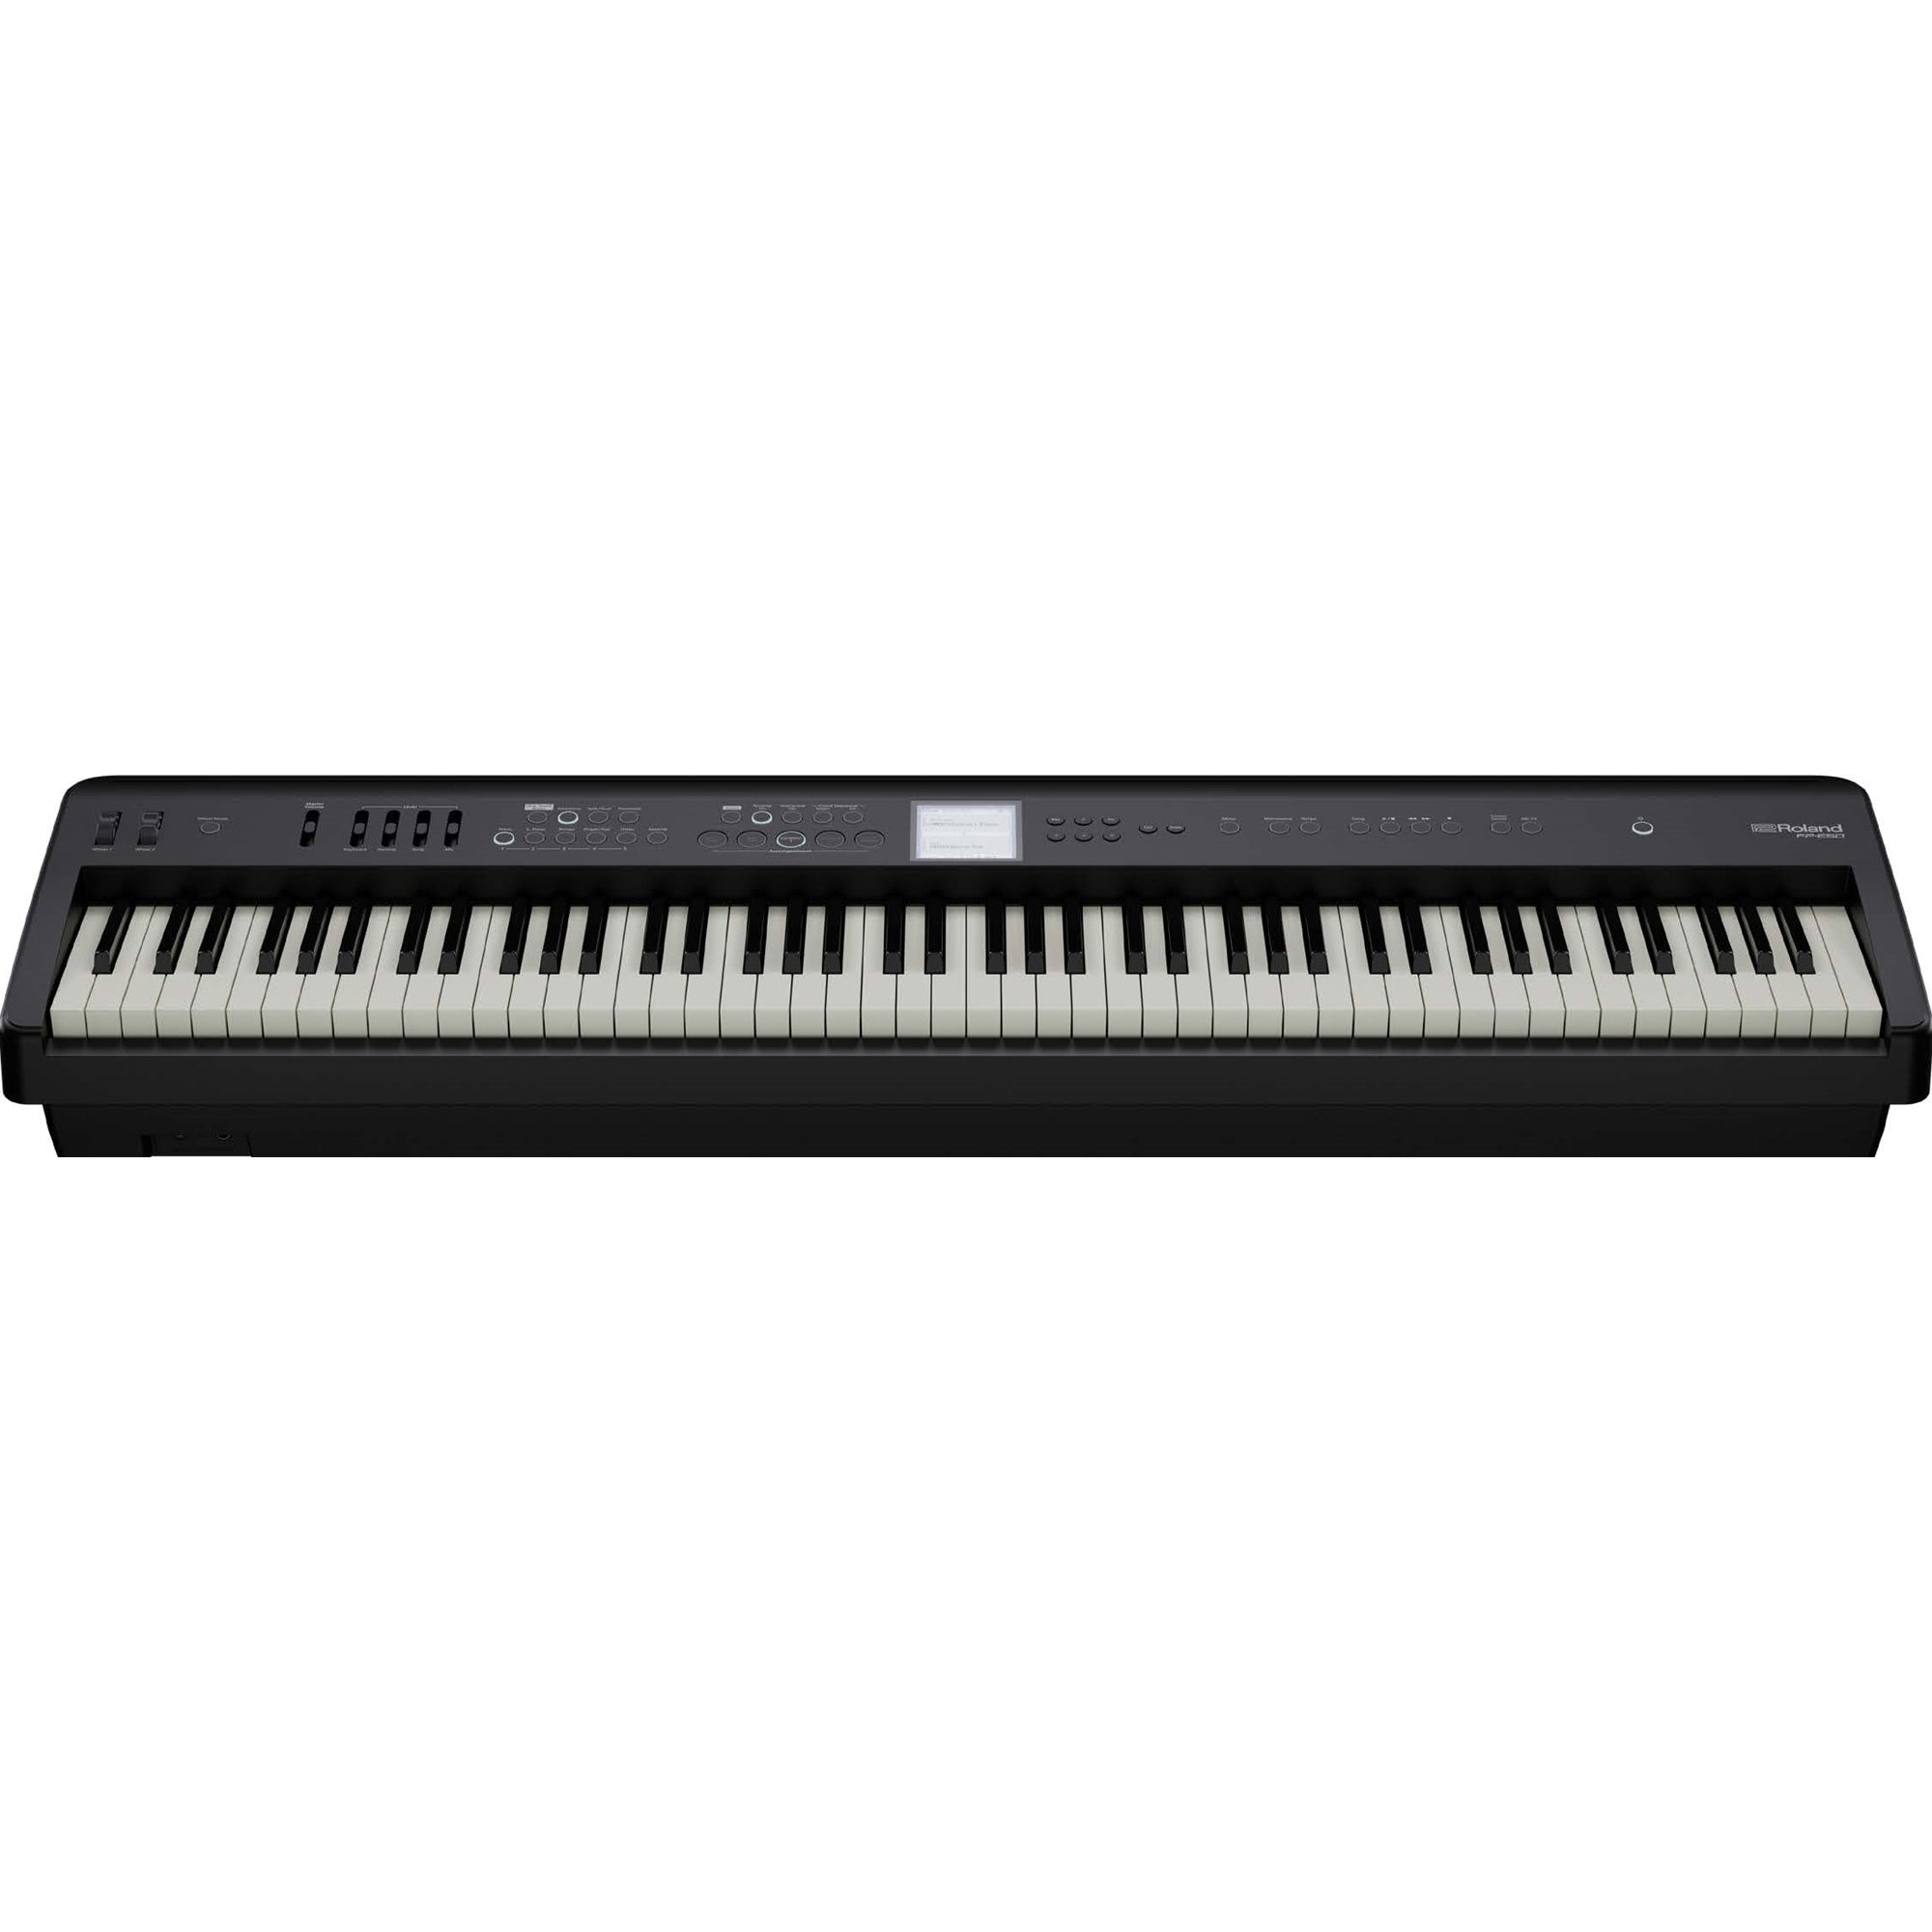 ROLAND FPE50BK Premium 88-Key Digital Piano with SuperNATURAL Piano Engine